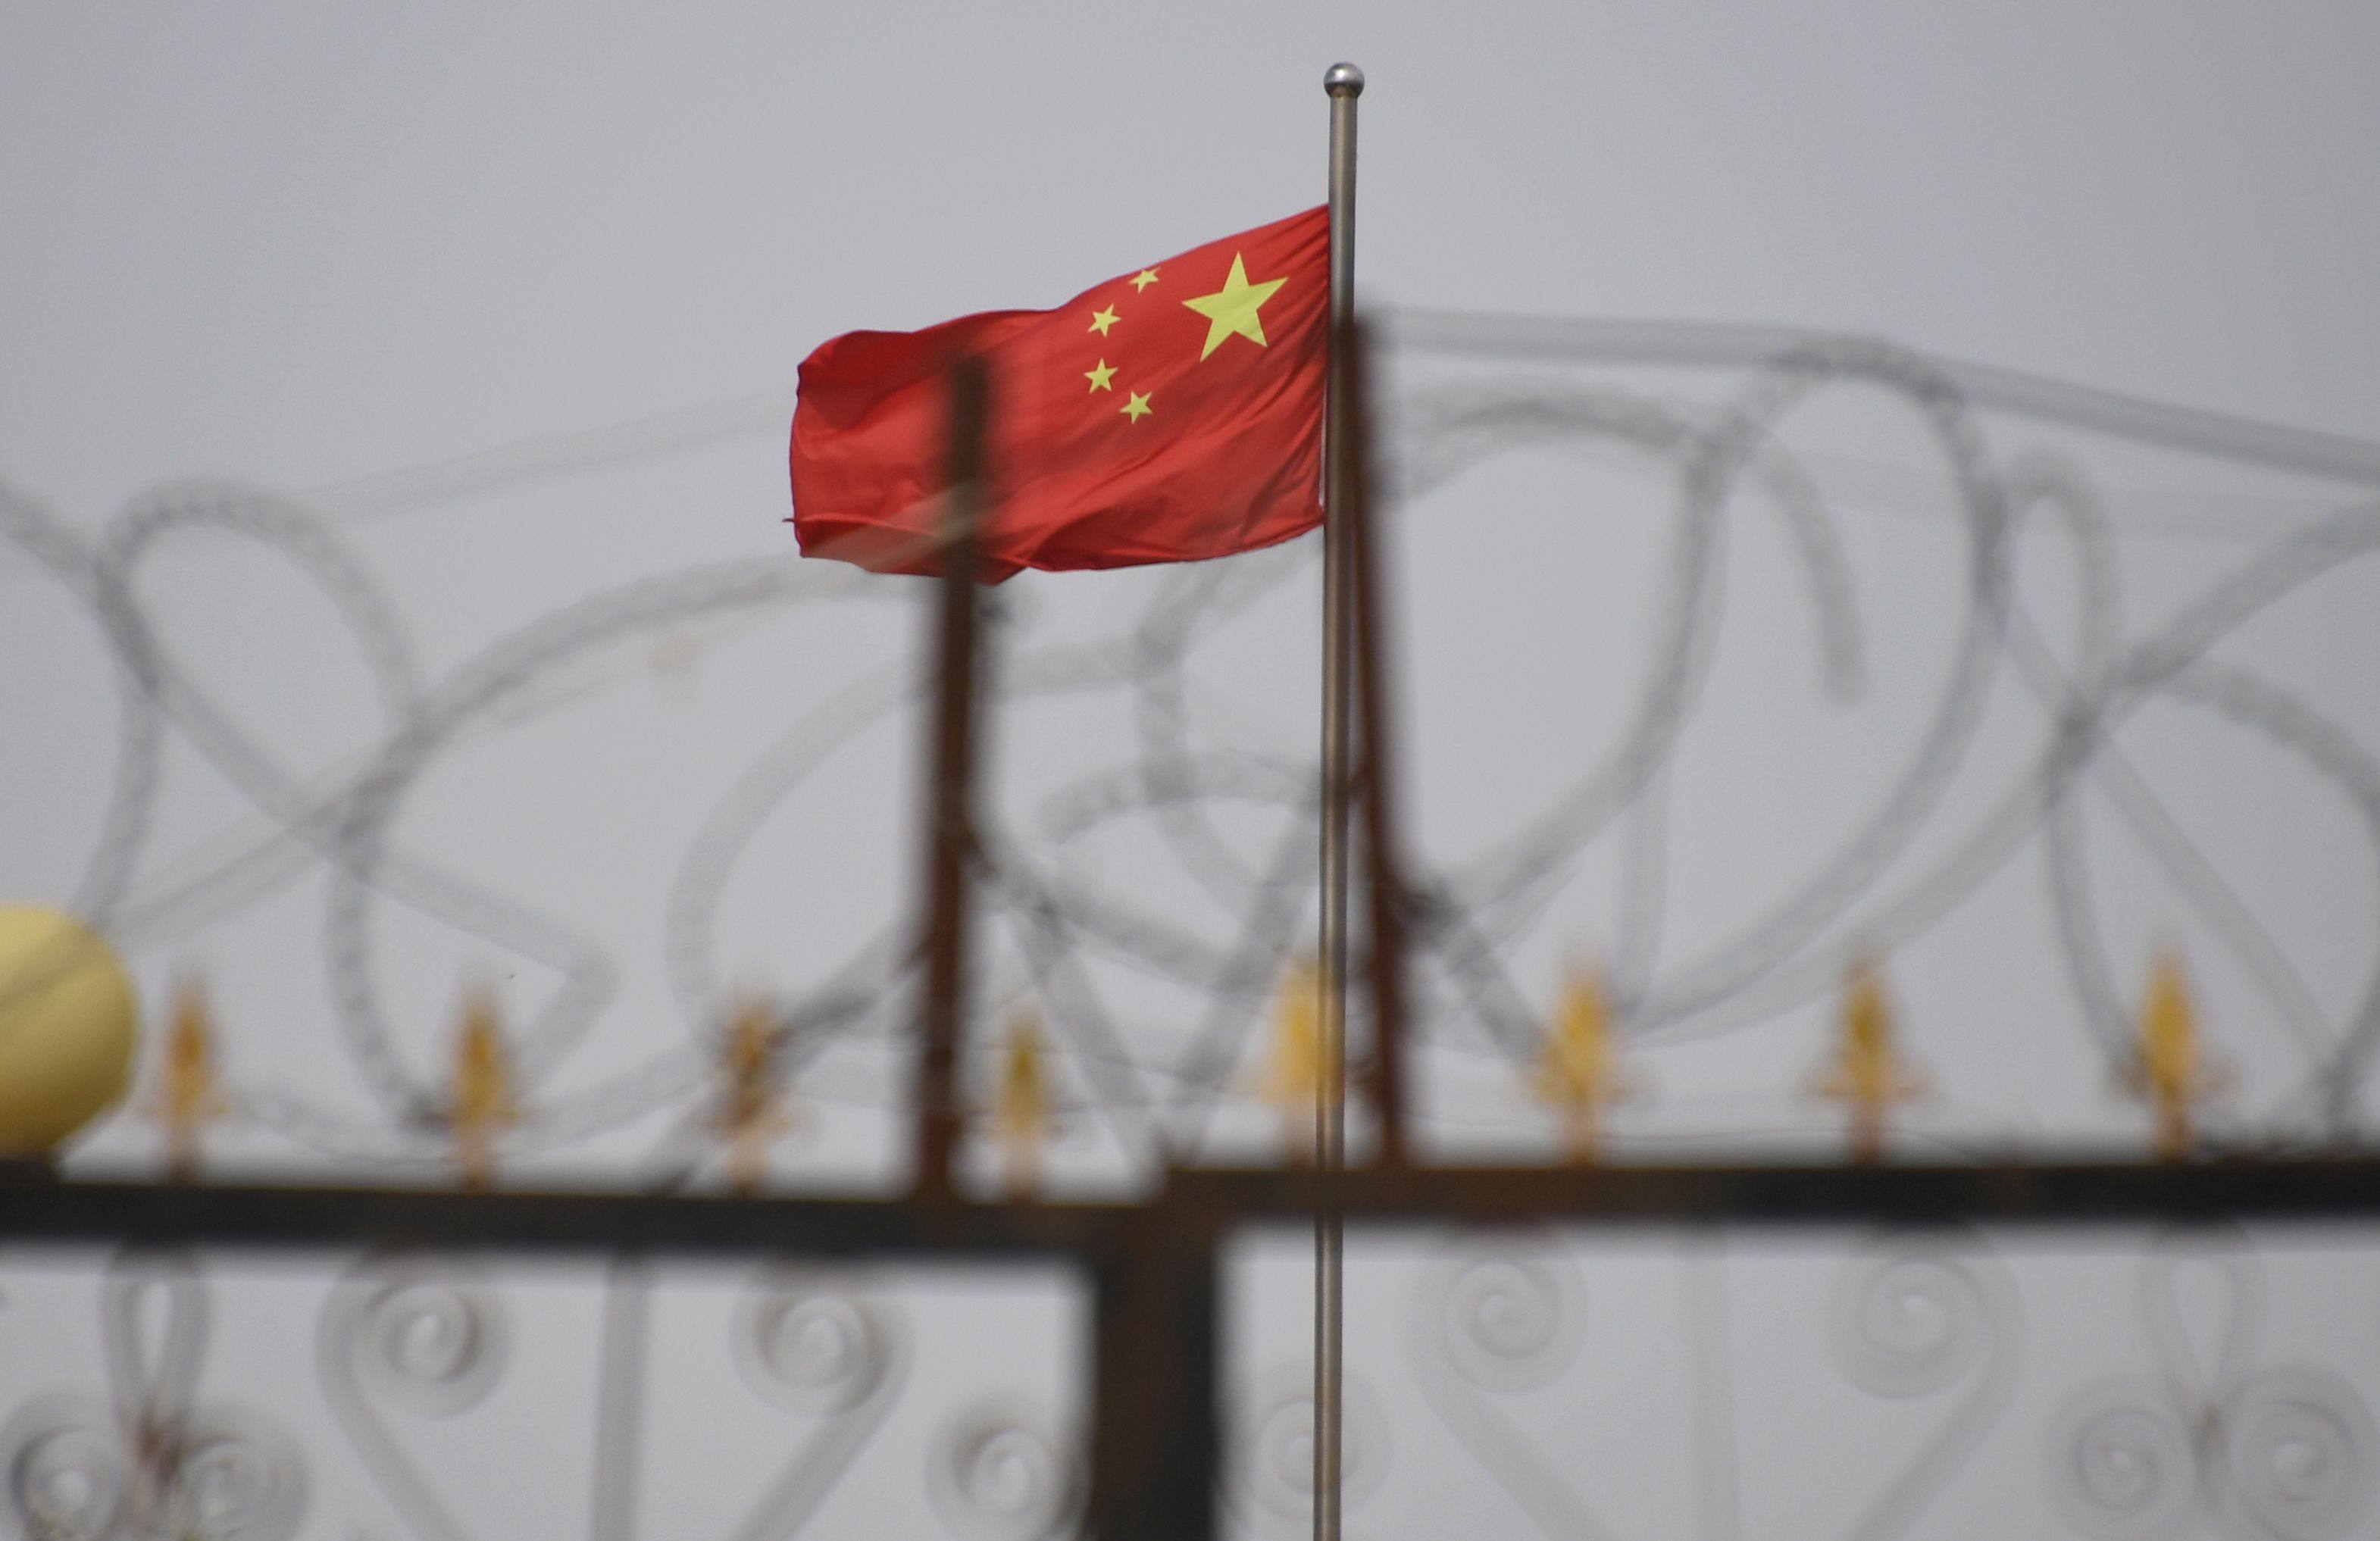 Nike, H&M face China fury over Xinjiang cotton 'concerns